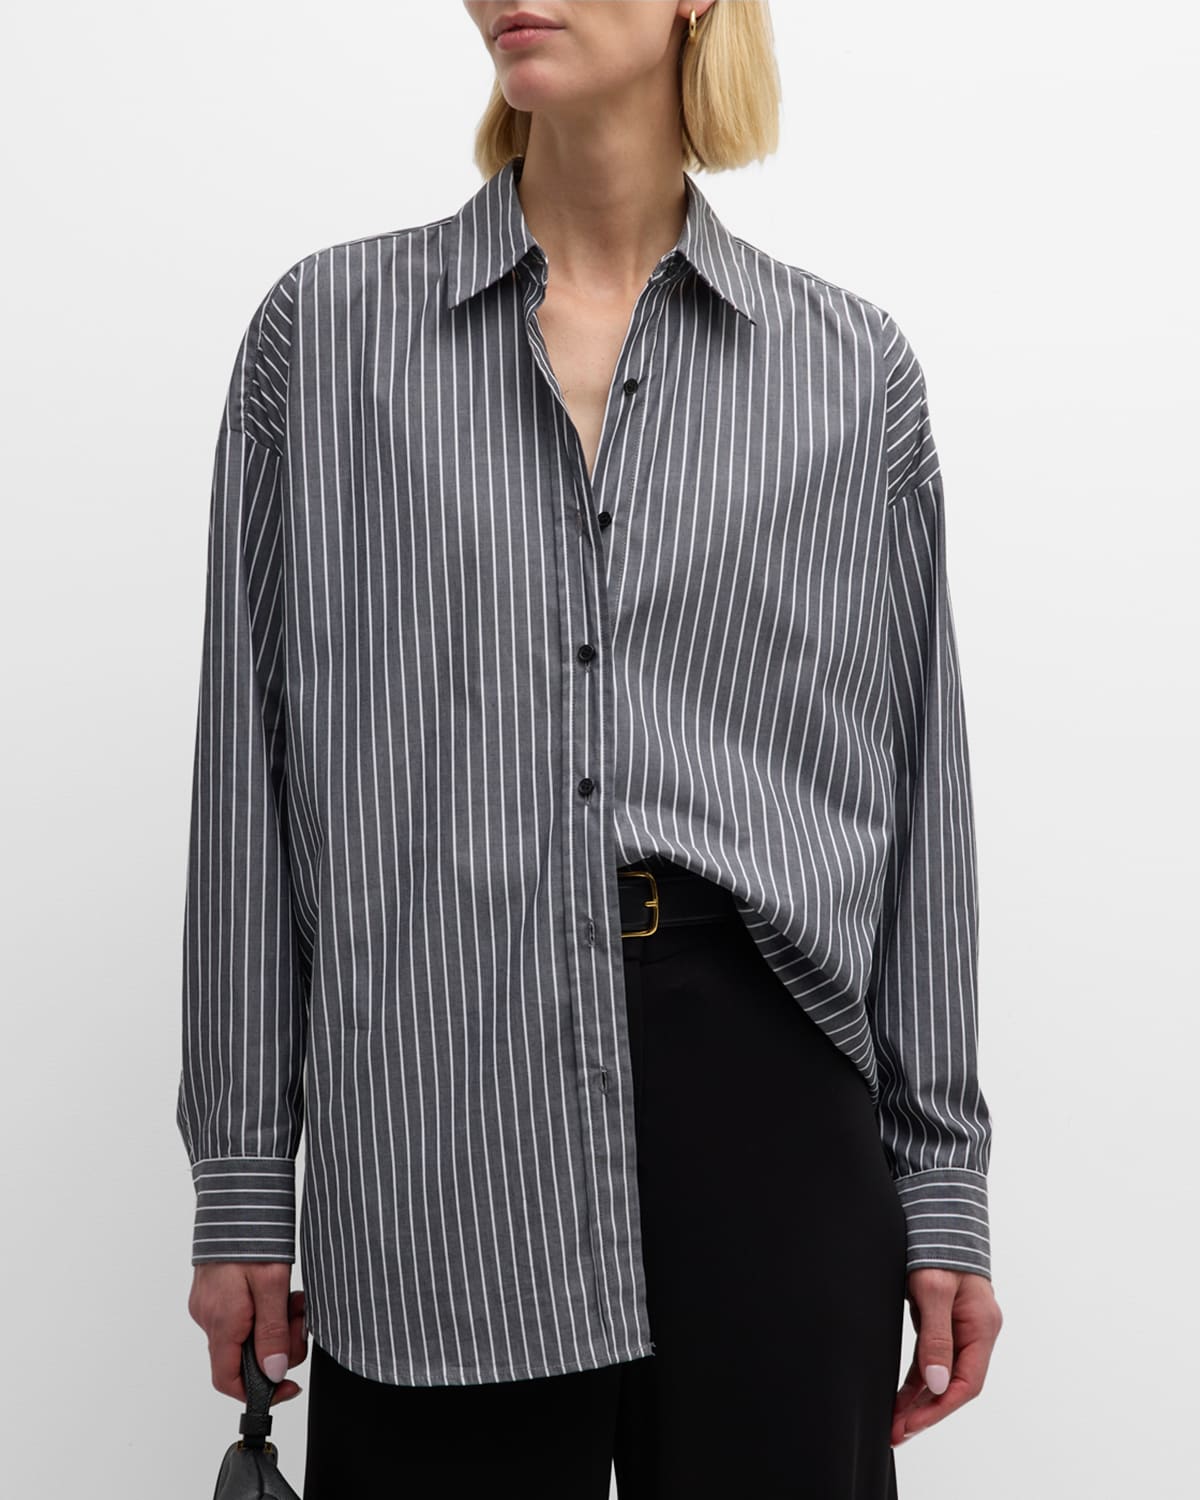 Nili Lotan Mael Striped Oversized Shirt In Black White Stripe